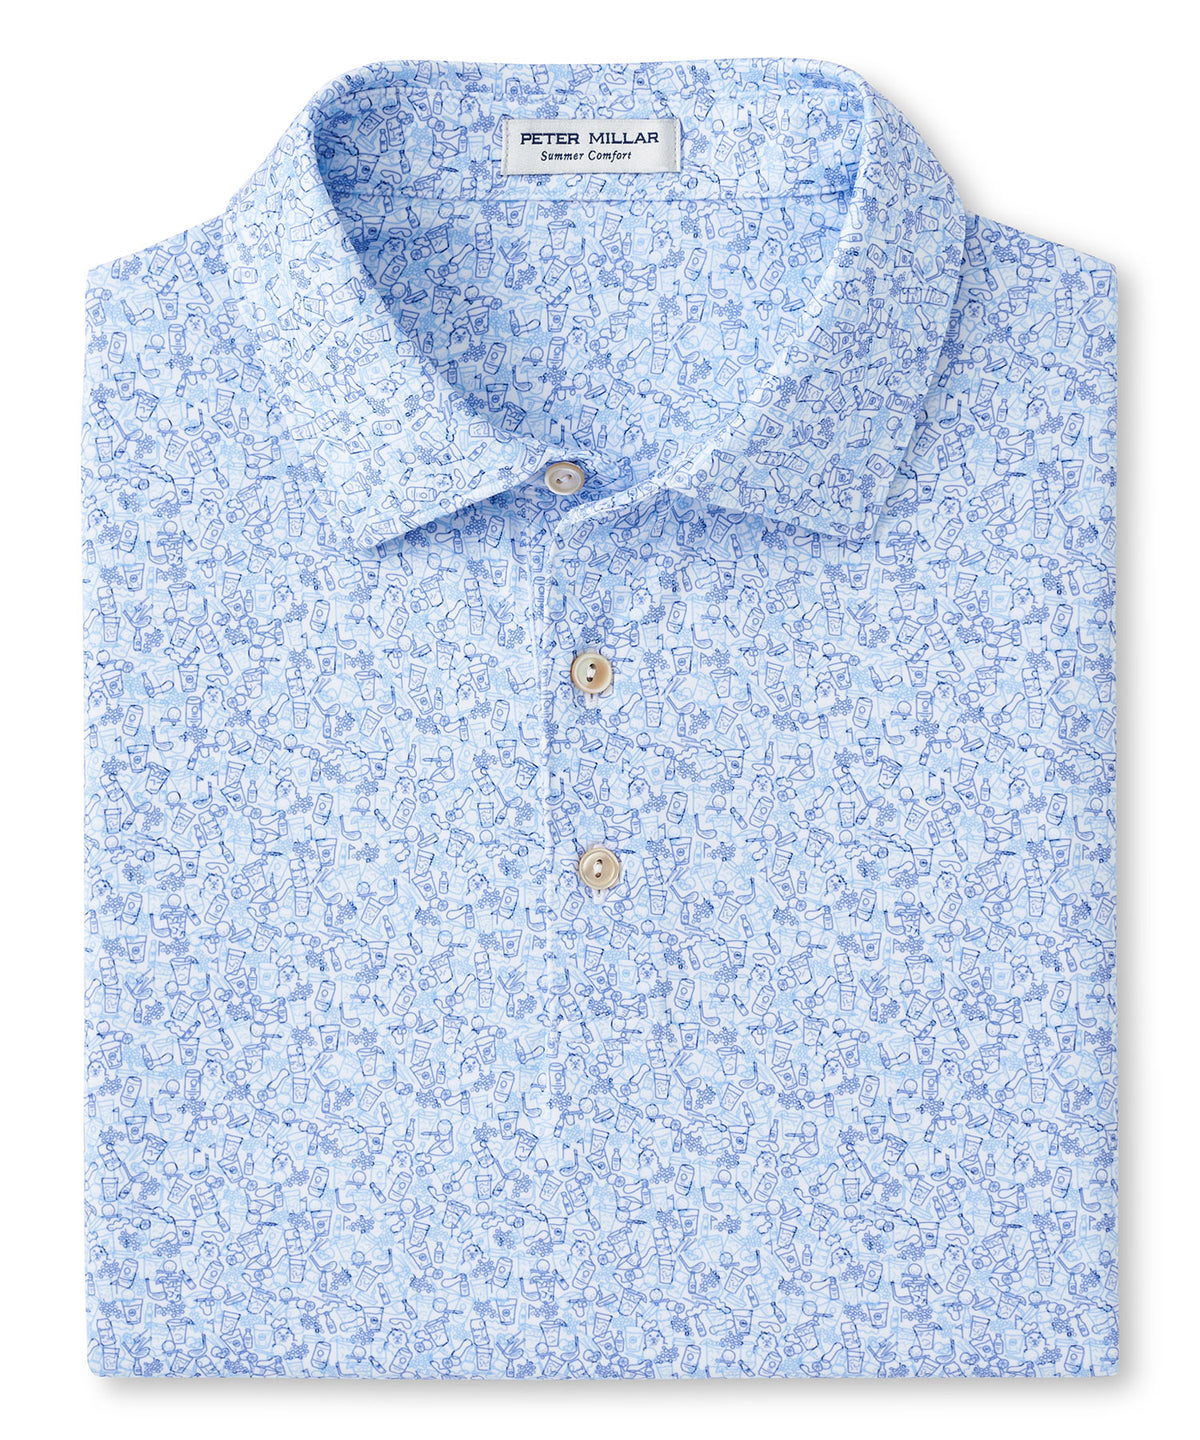 Peter Millar Short Sleeve Dazed and Transfused Print Polo Knit Shirt, Big & Tall